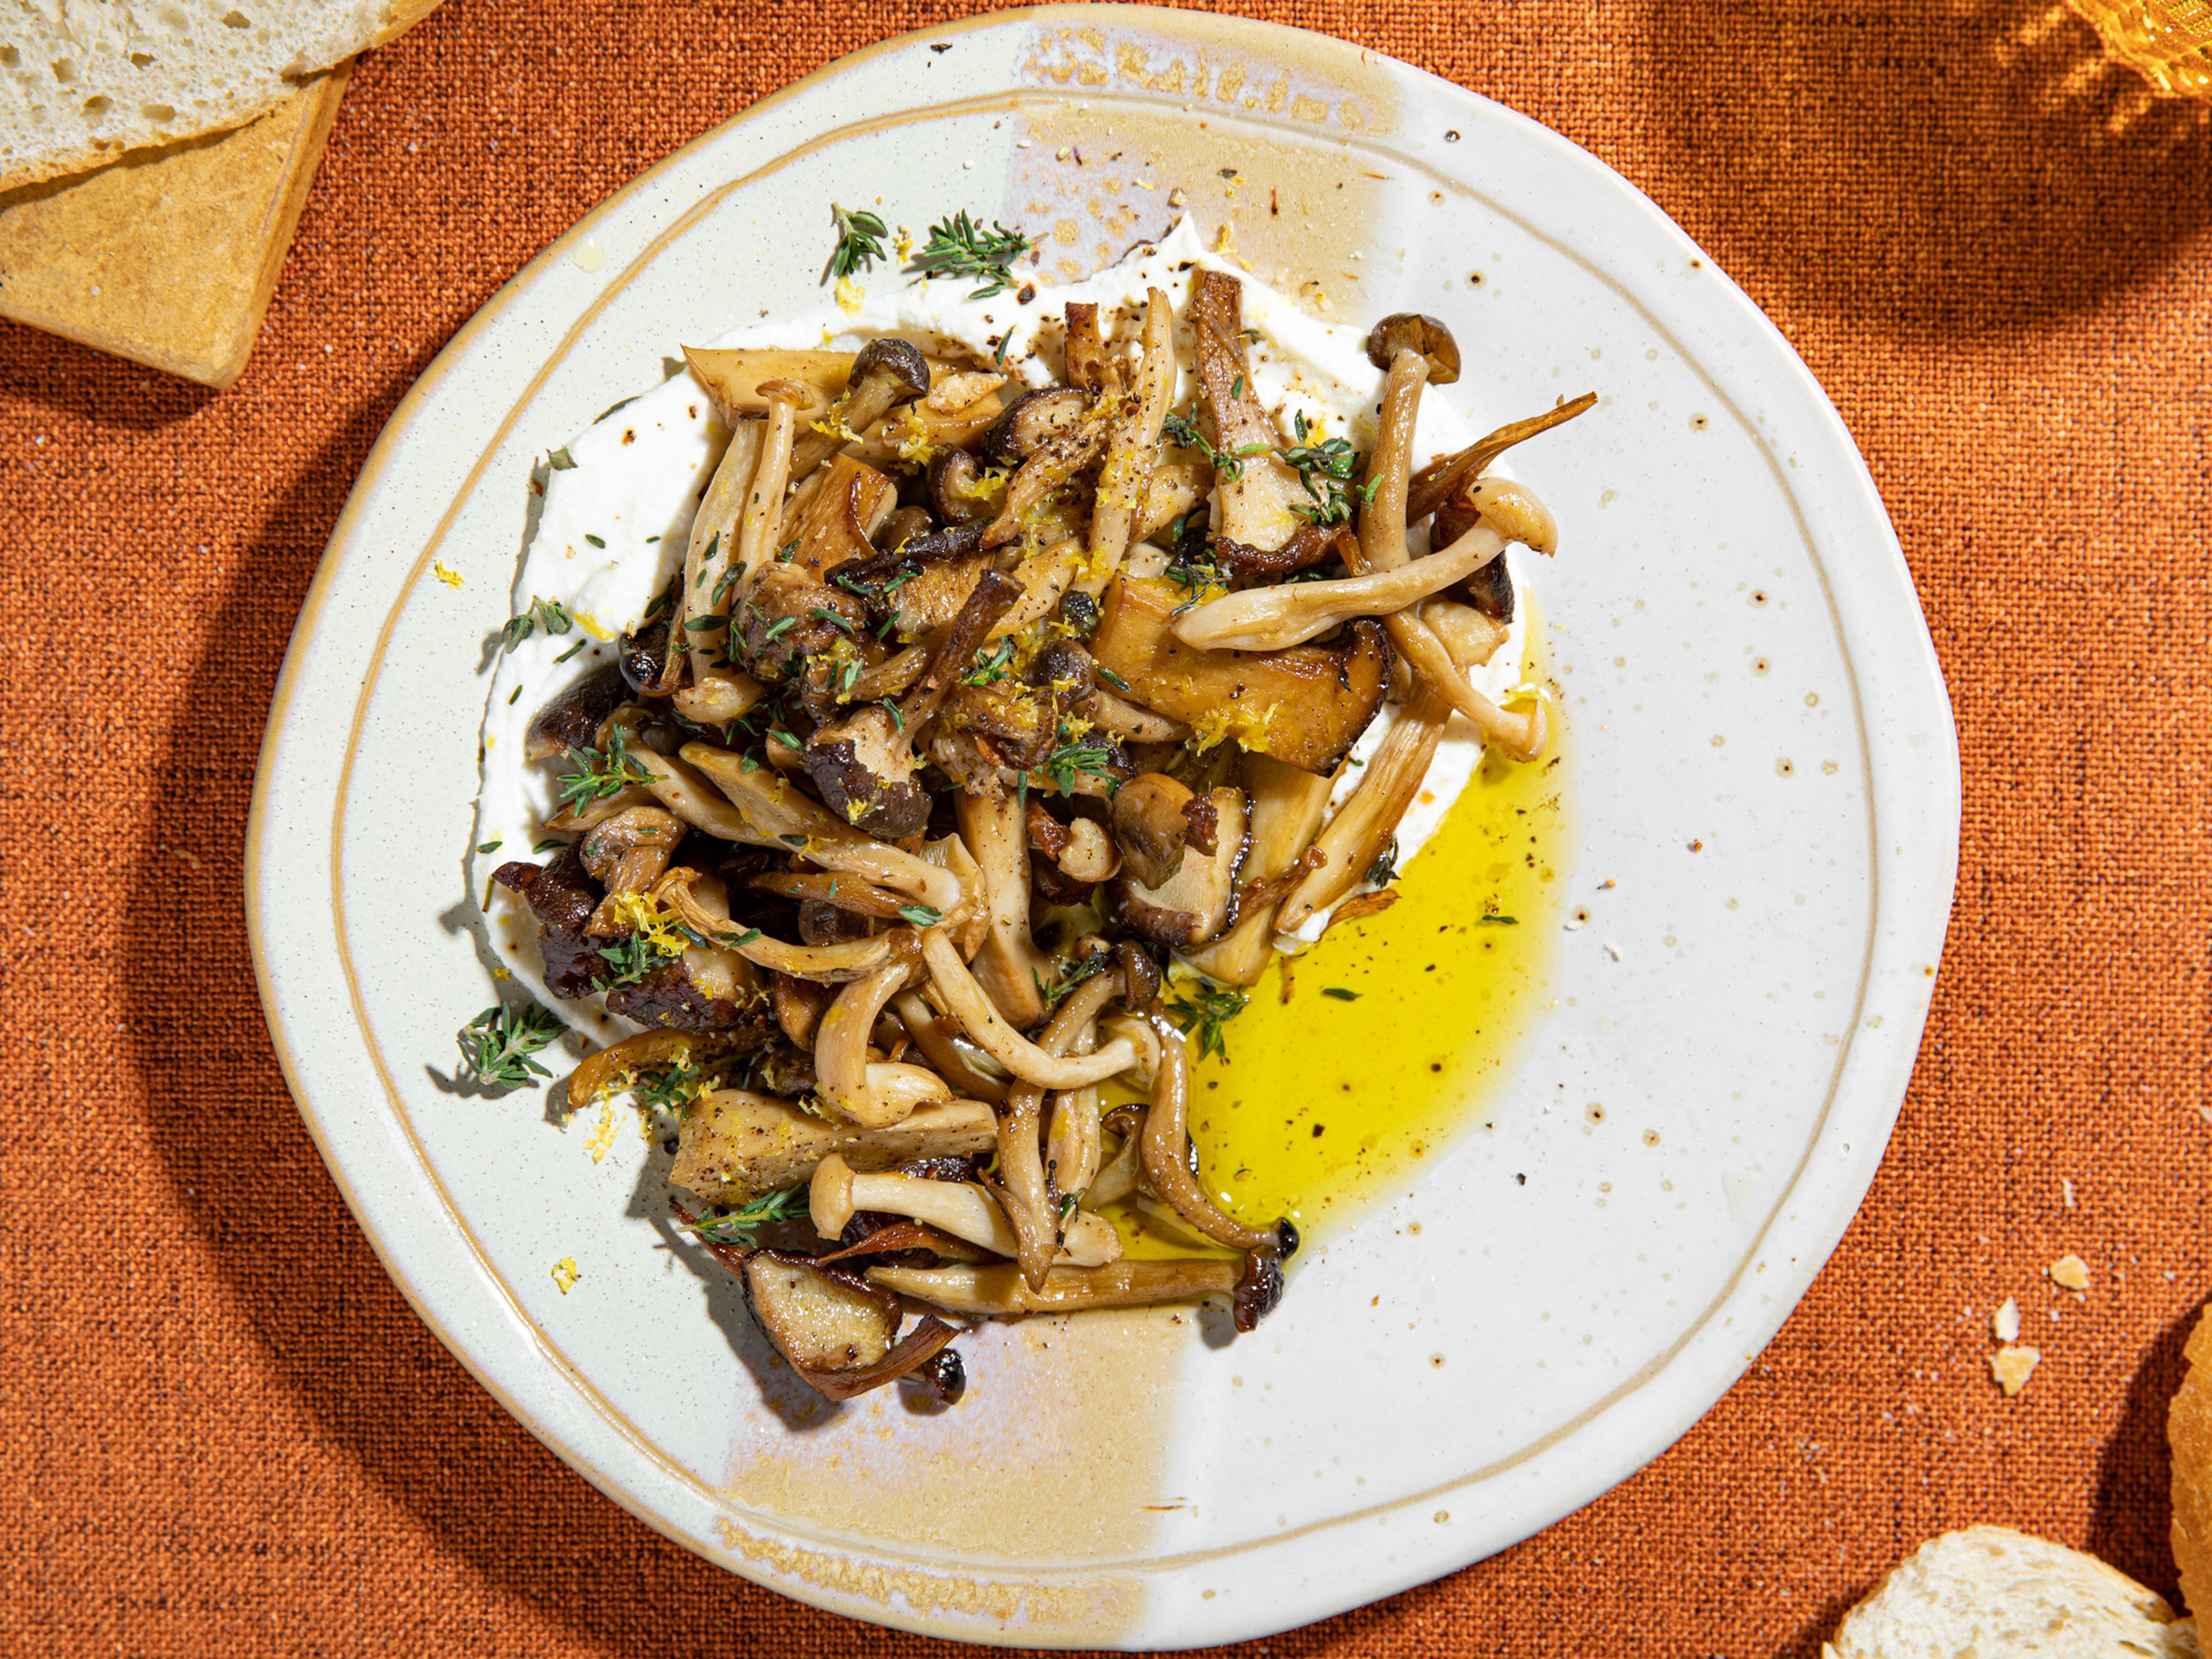 All-purpose garlicky roasted mushrooms